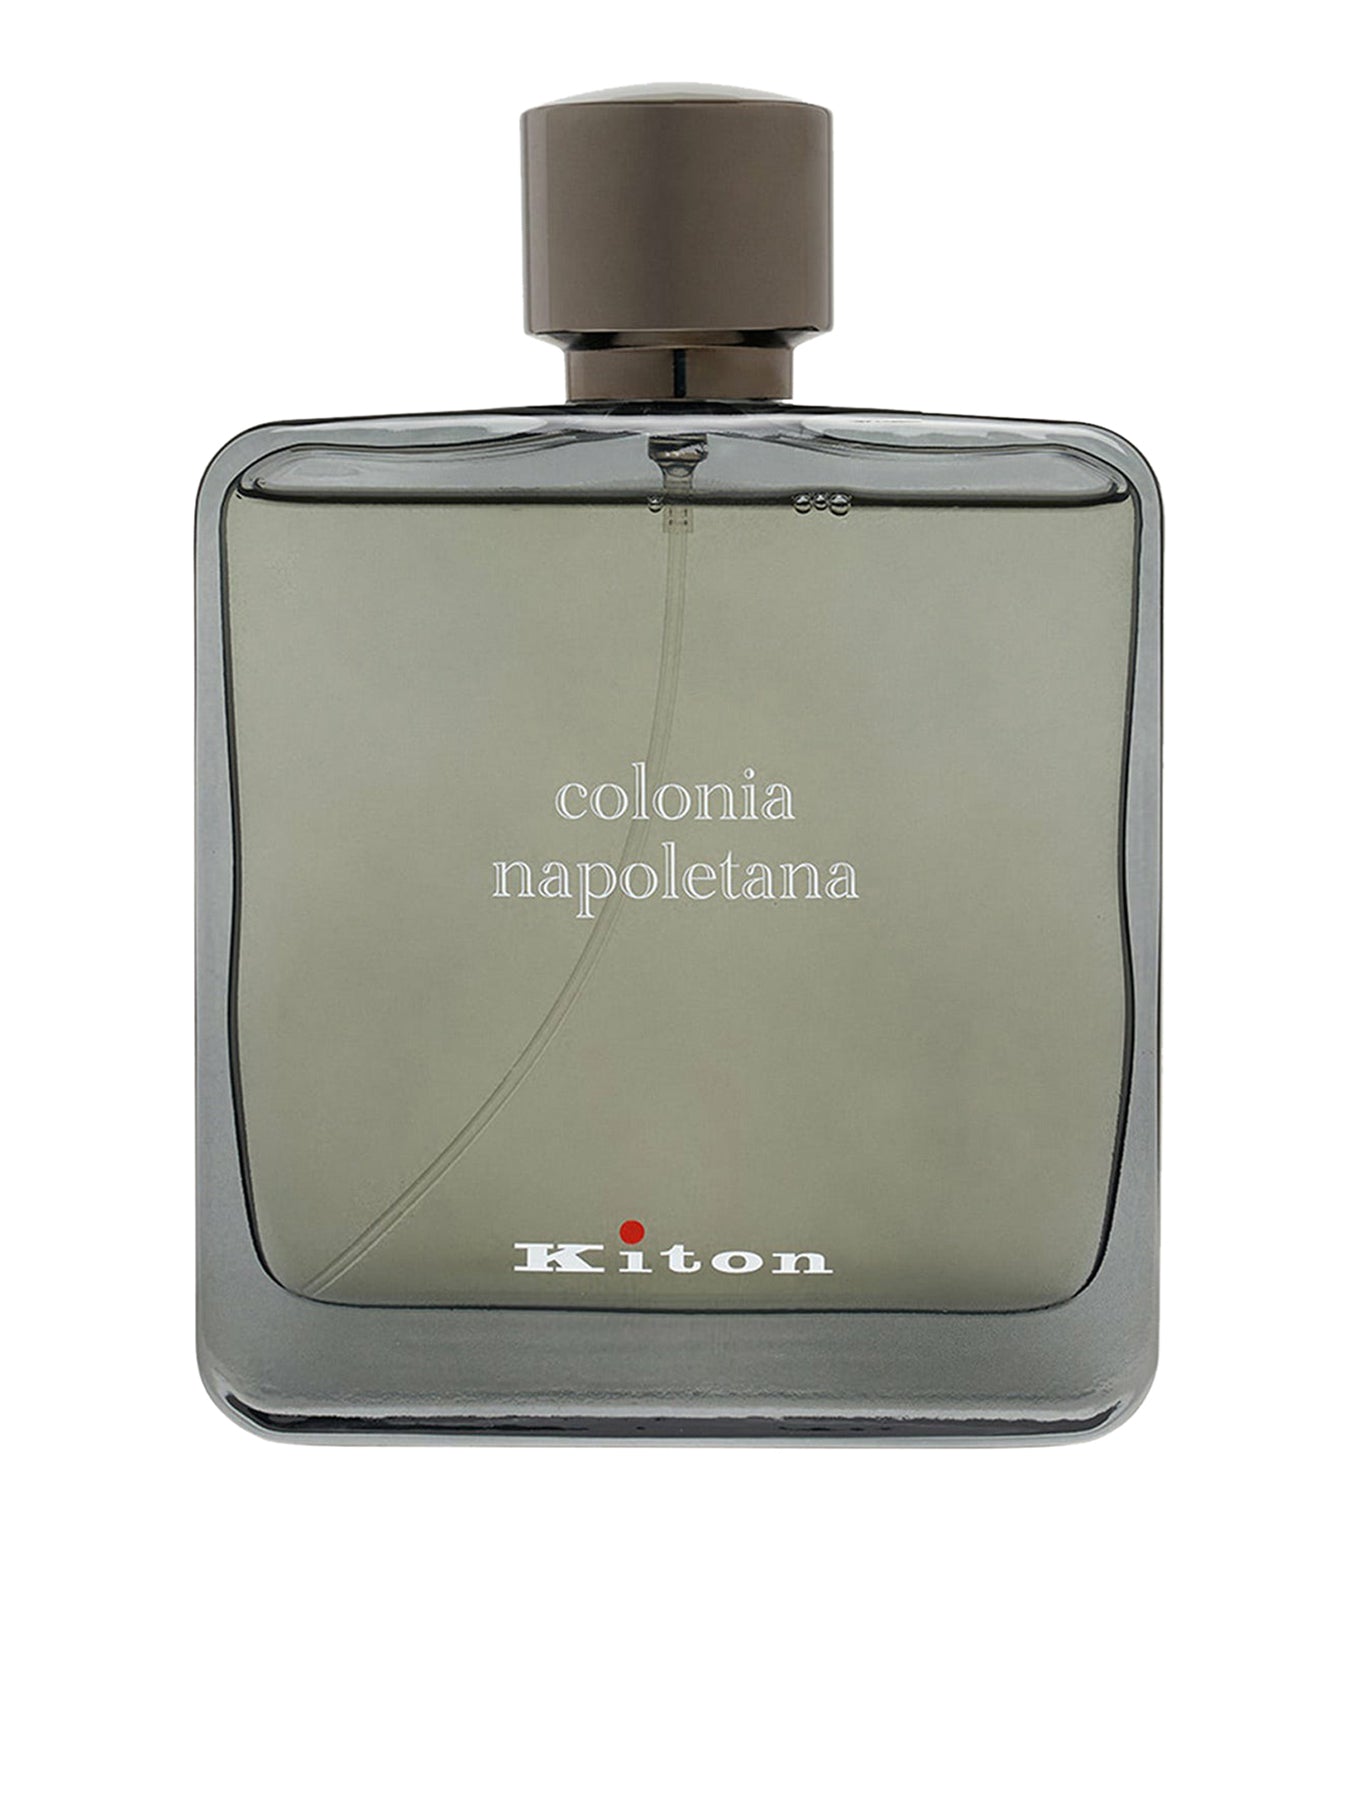 COLONIA NAPOLETANA perfume